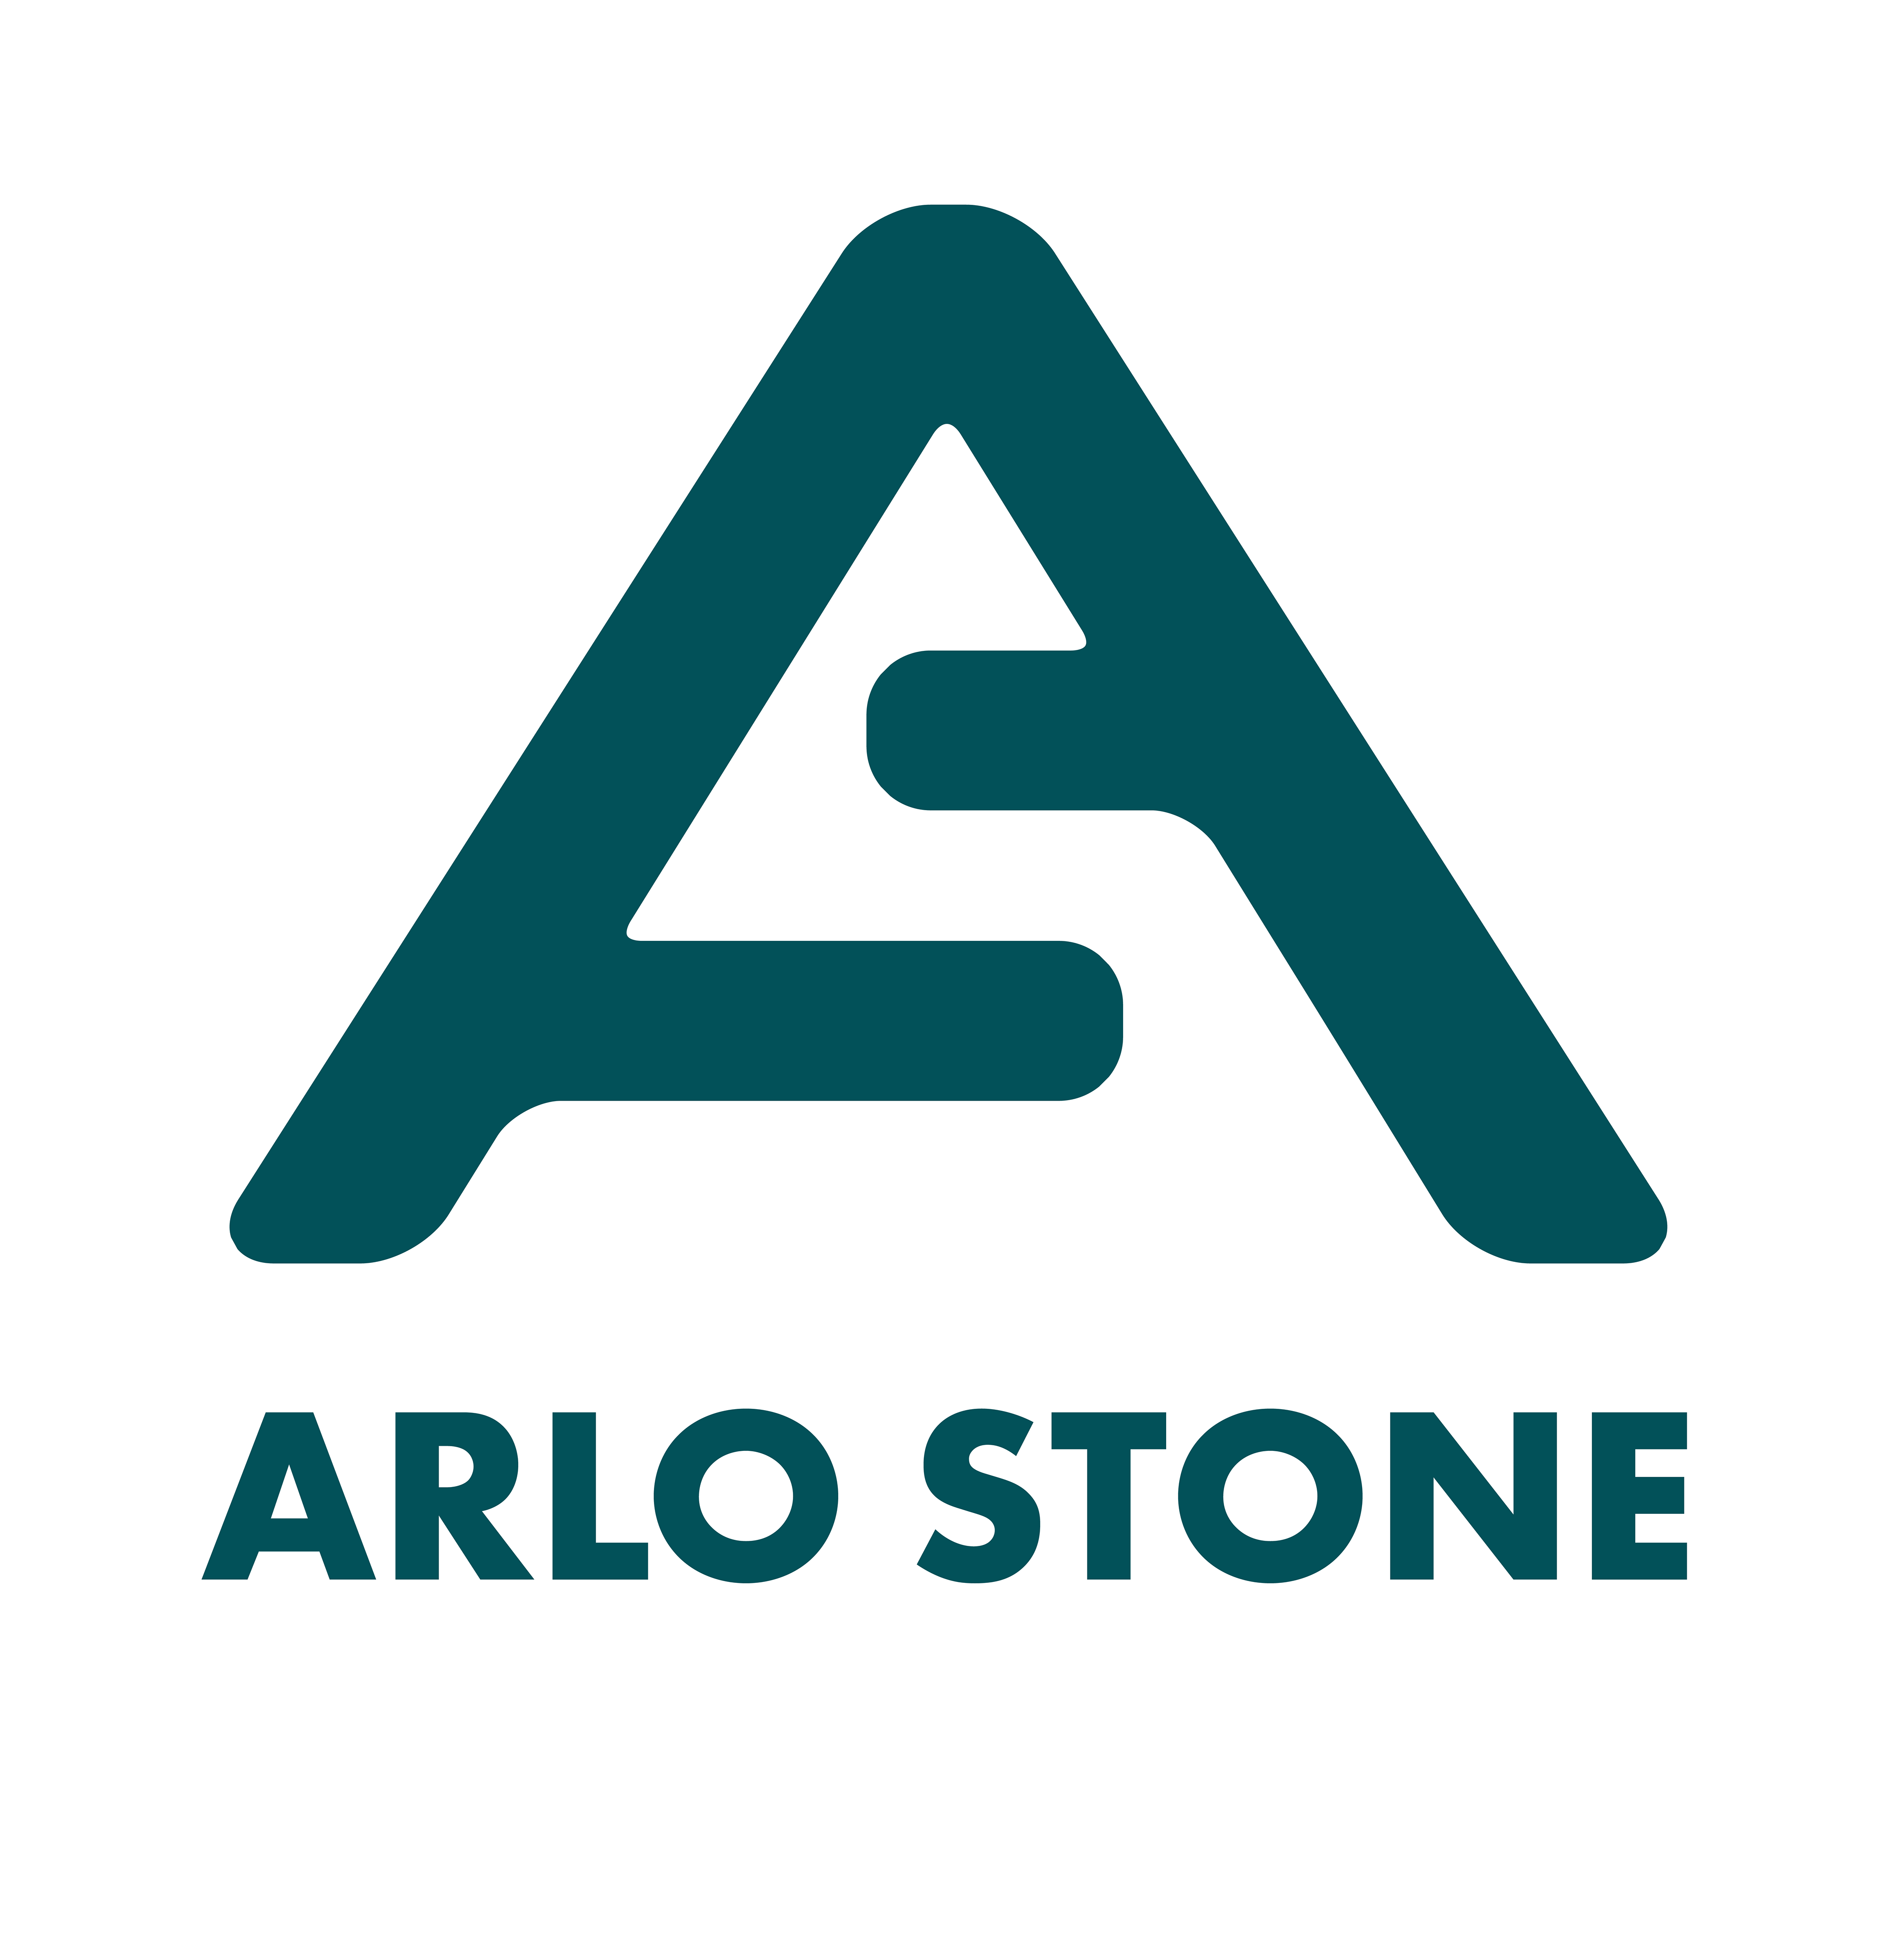 Arlo Stone